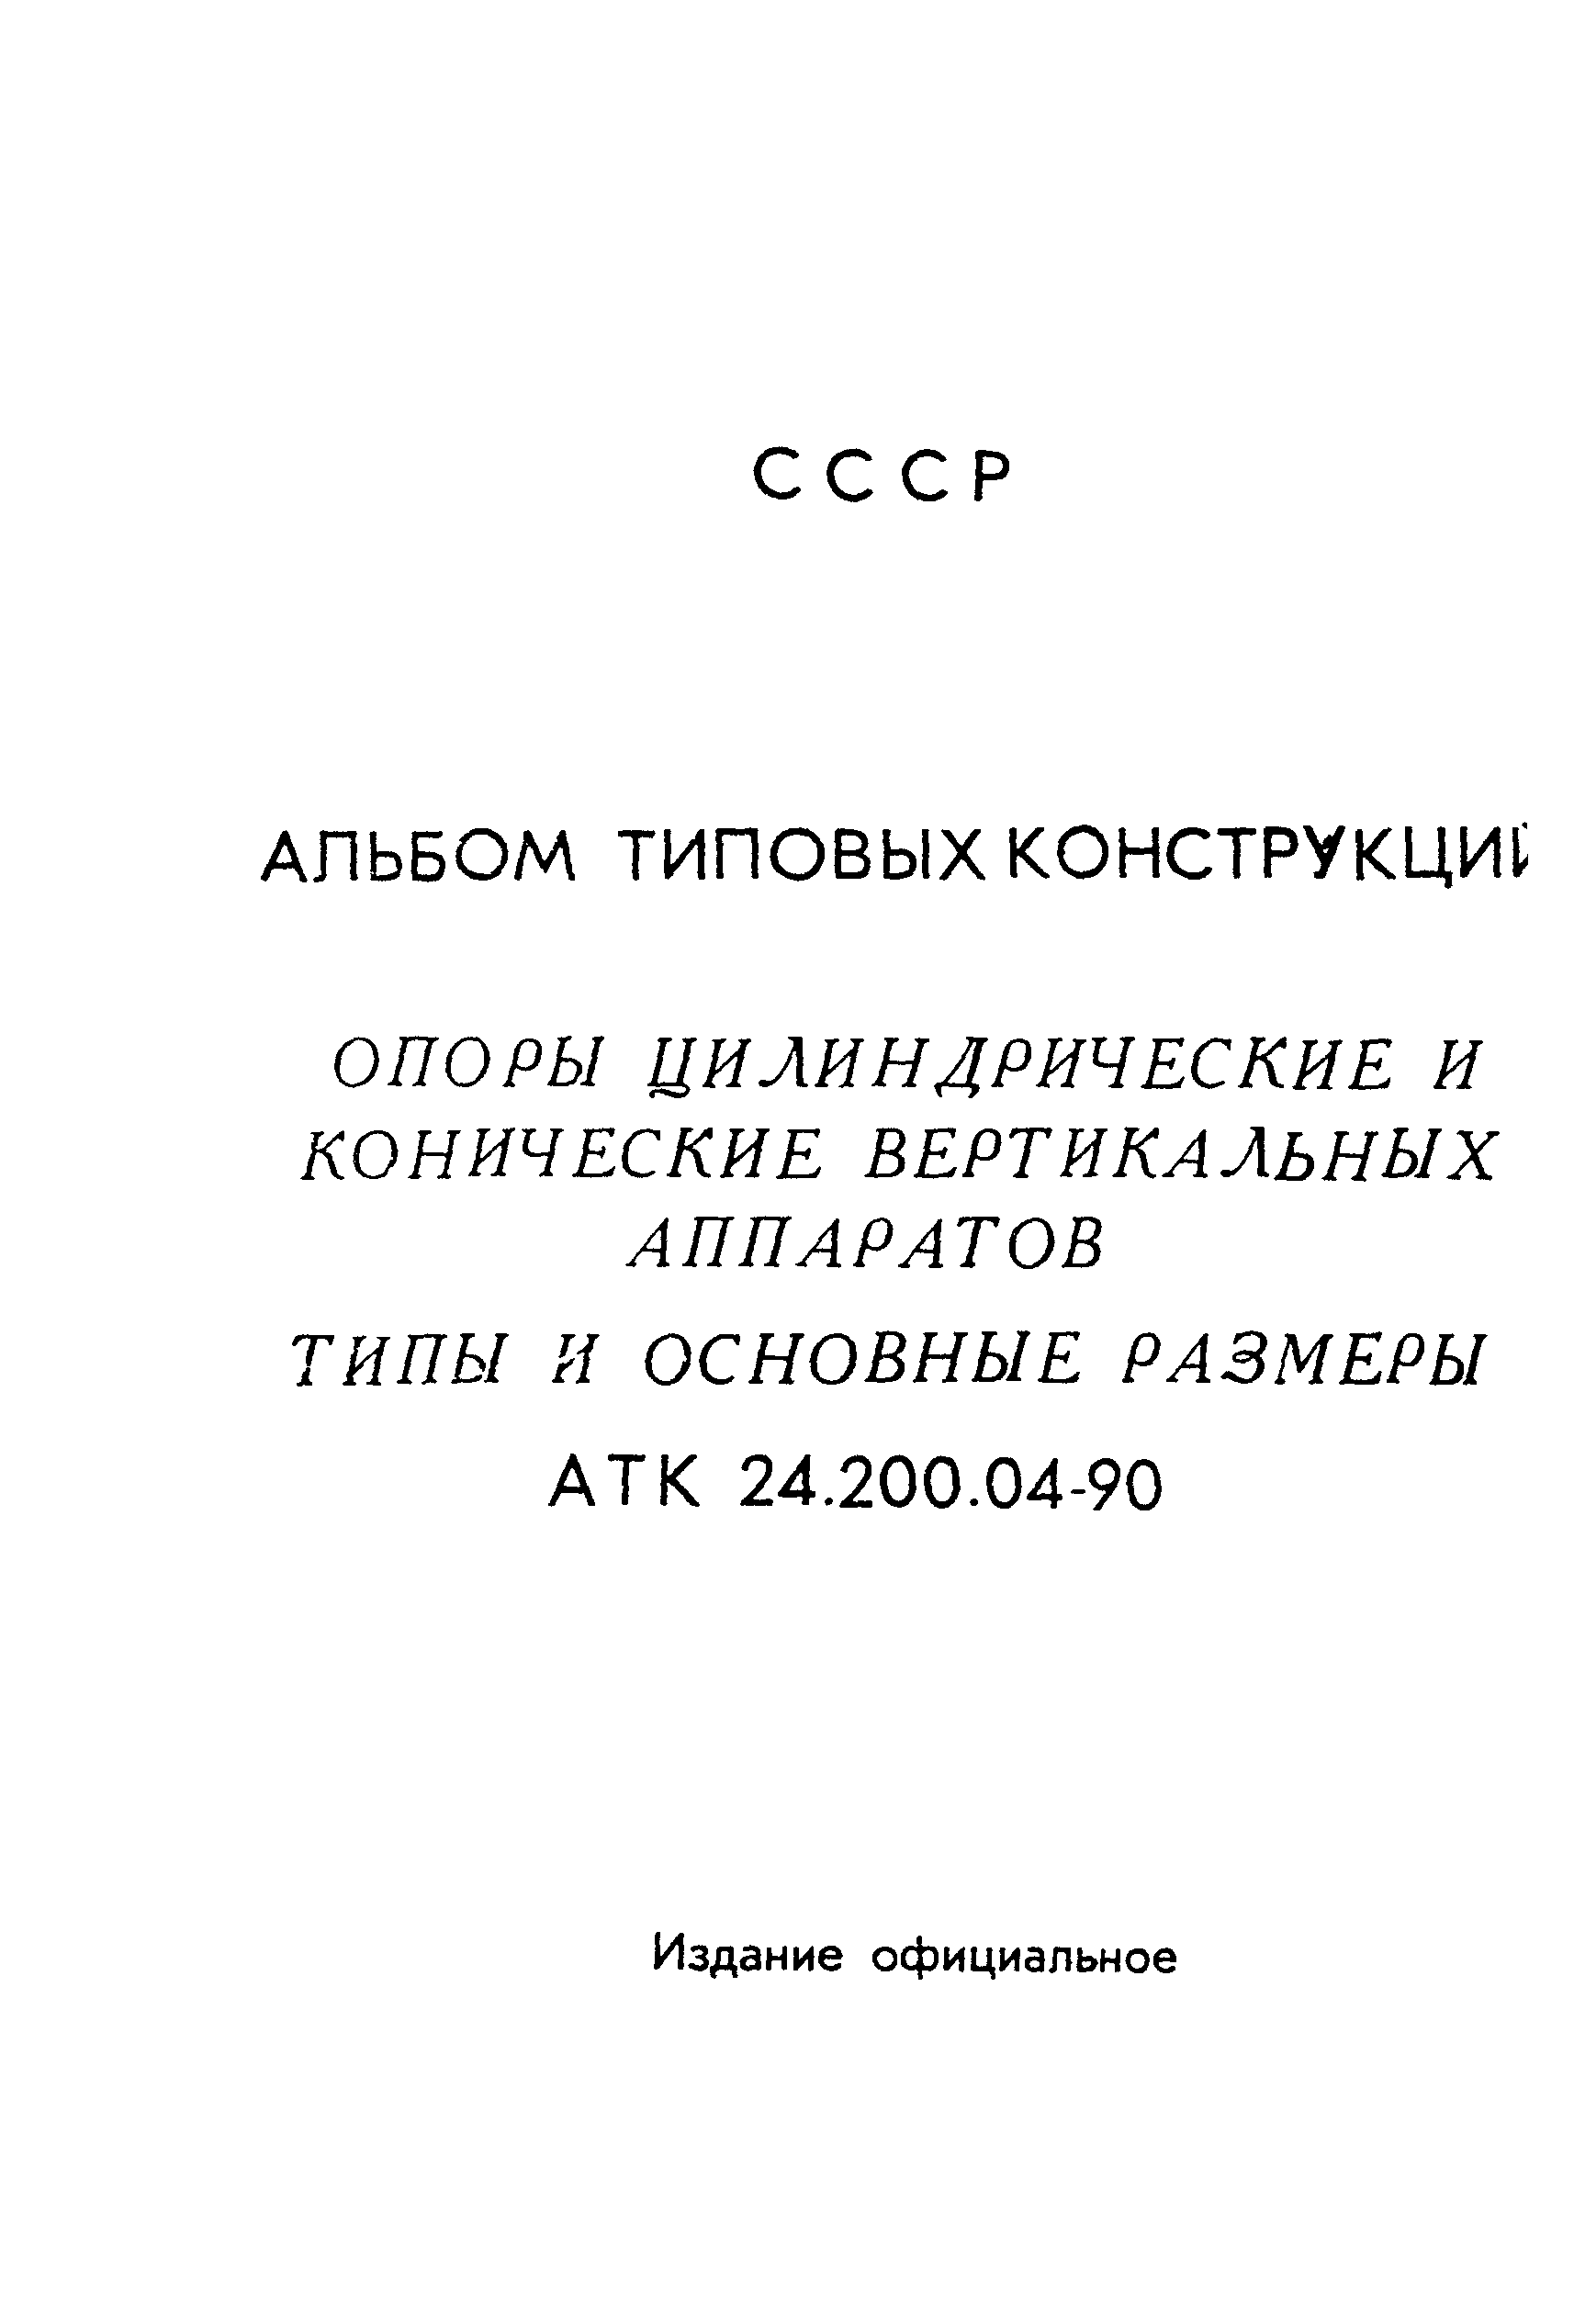 АТК 24.200.04-90